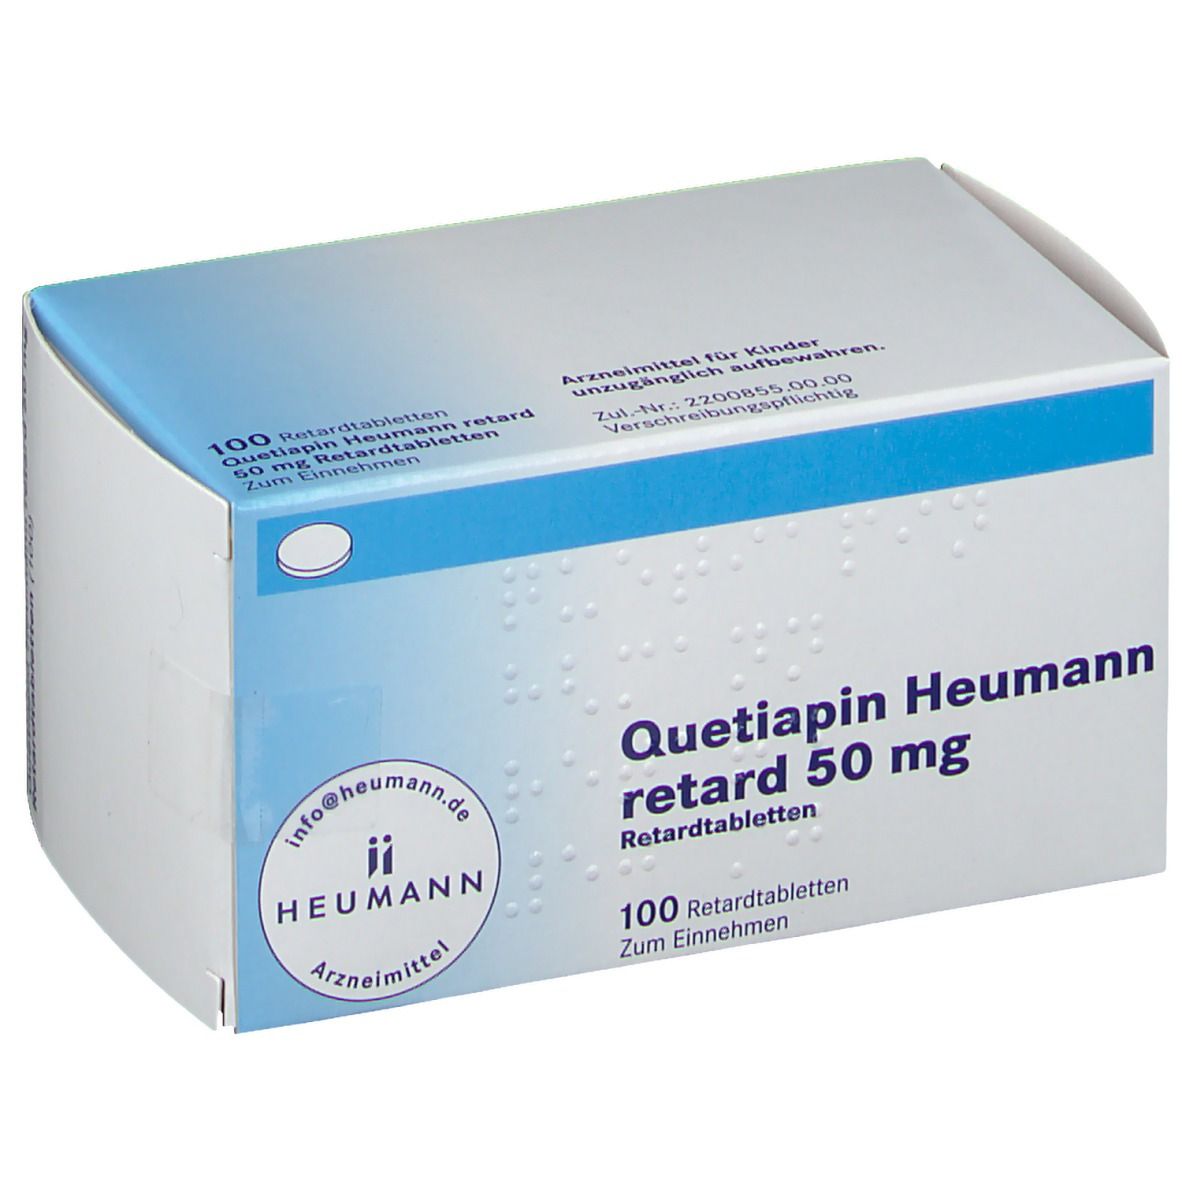 Quetiapin Heumann retard 50 mg